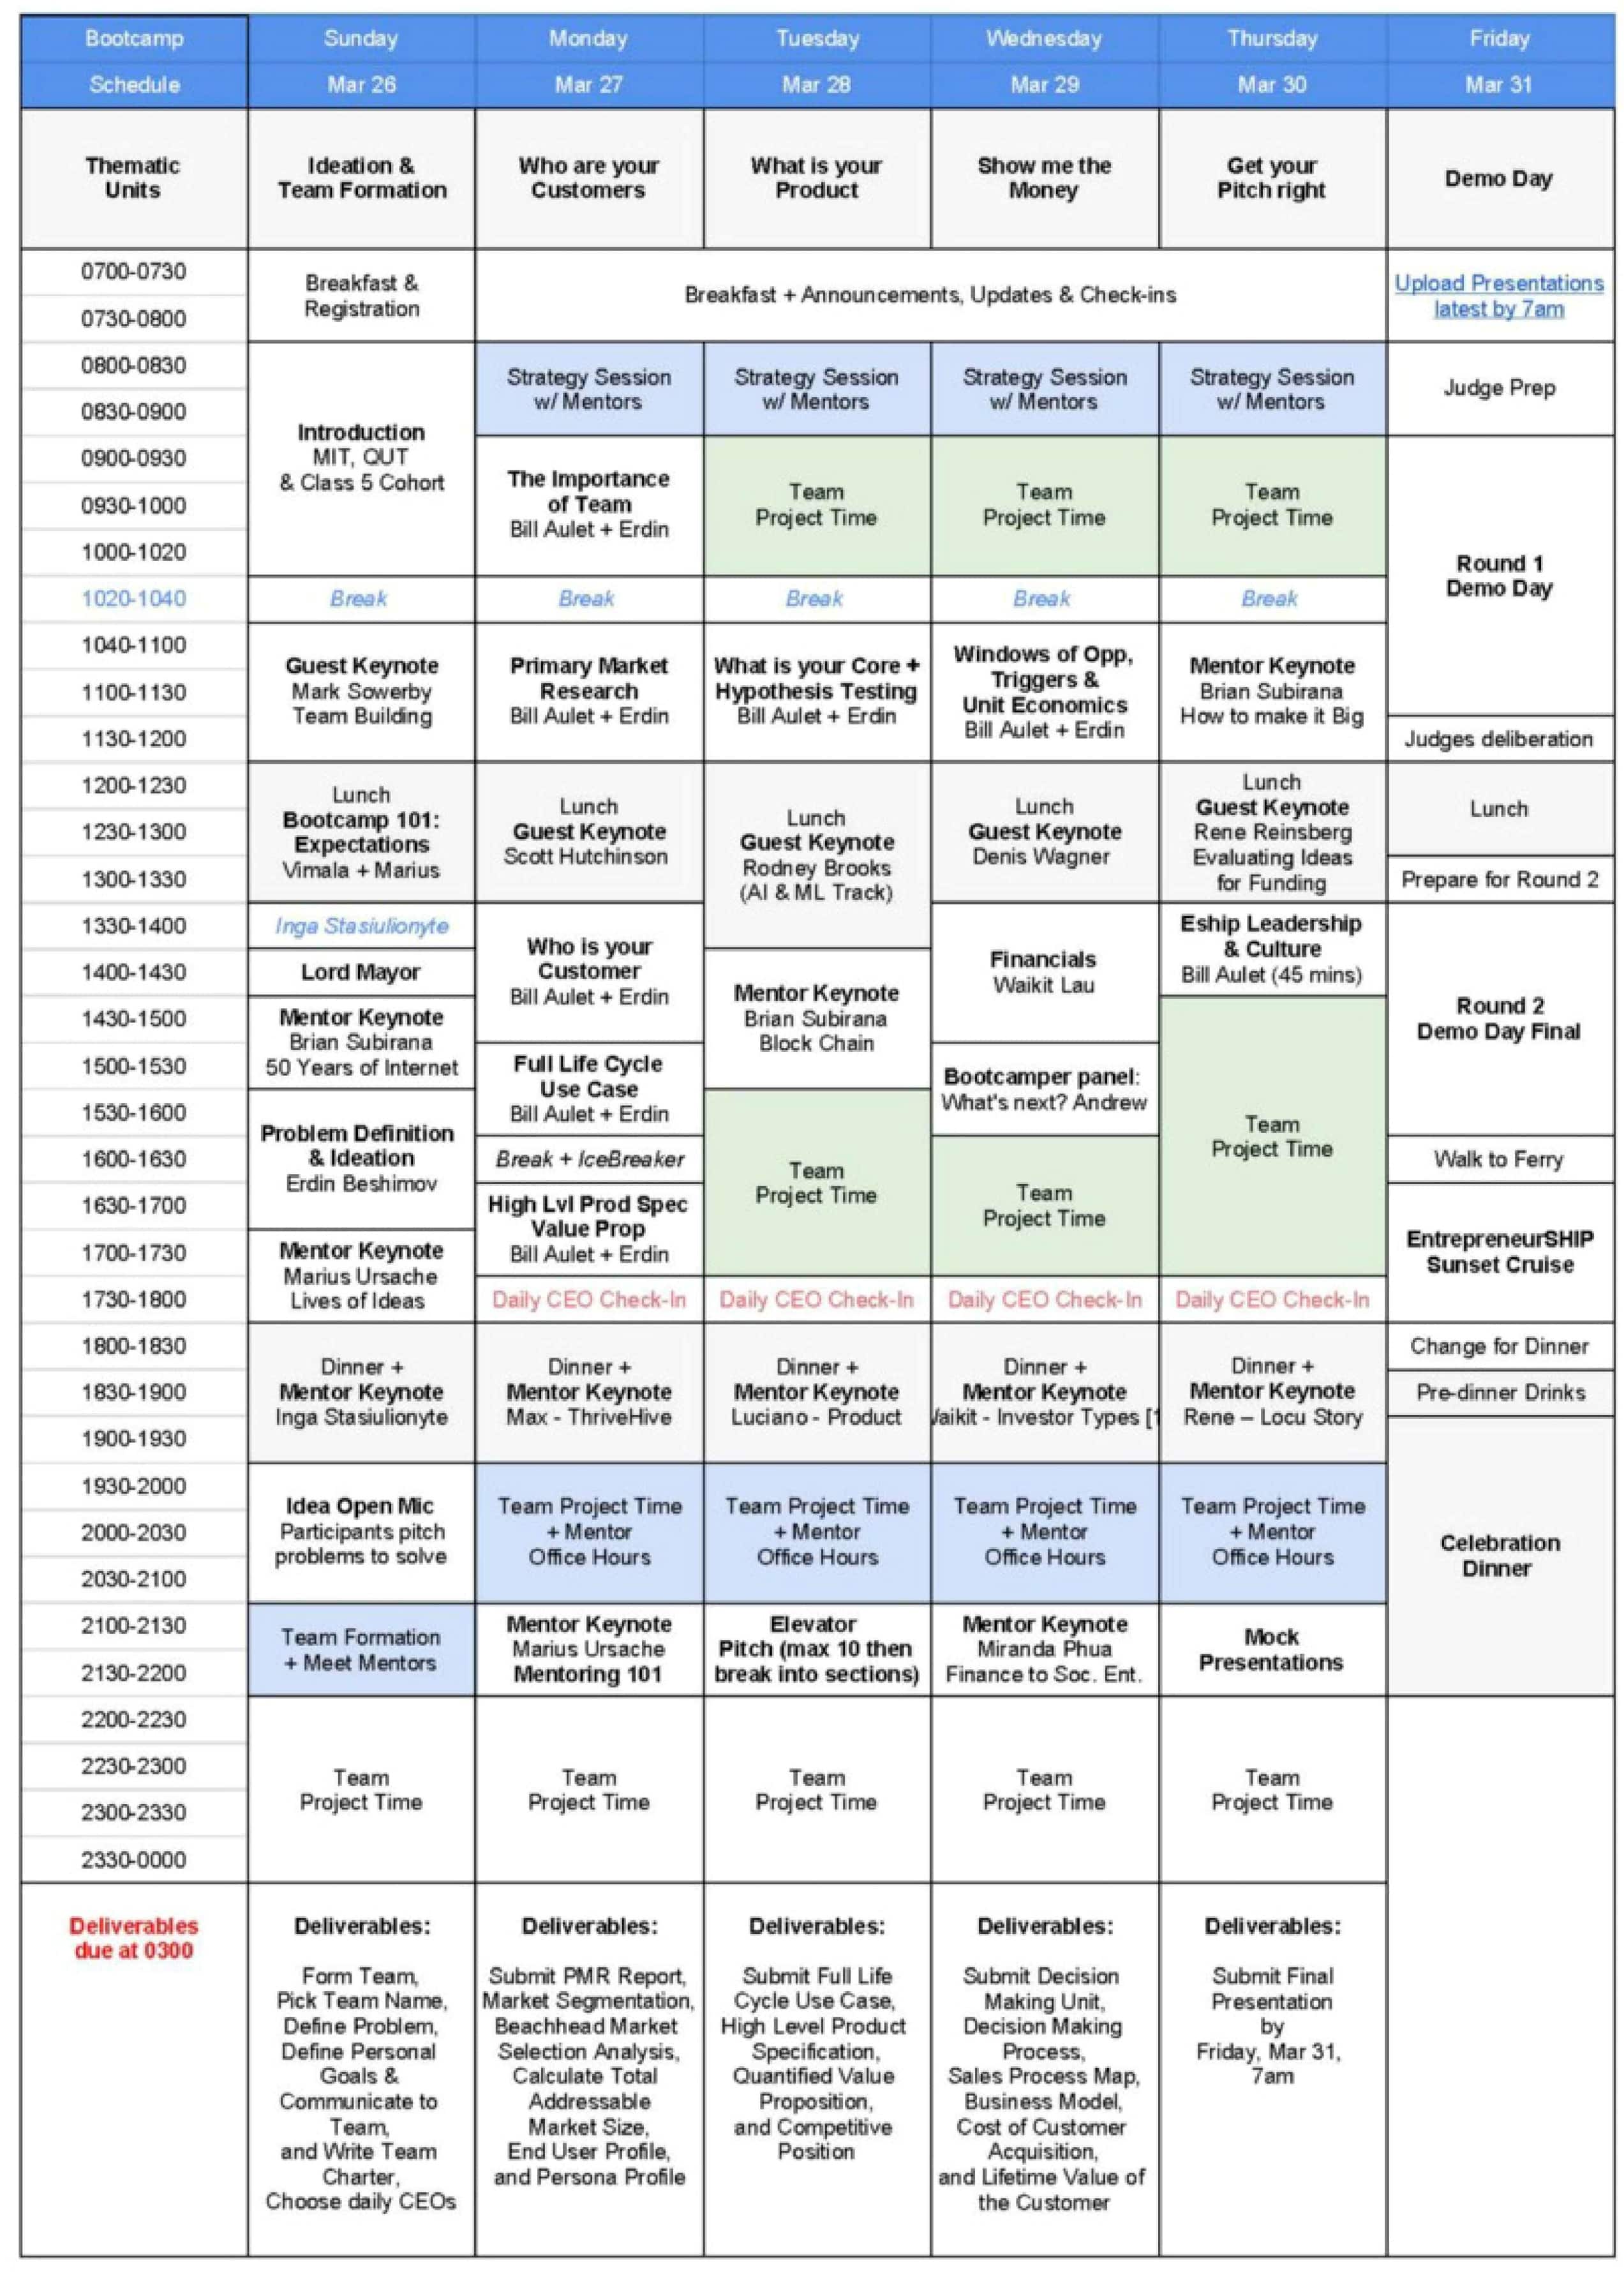 MIT Global Entrepreneurship 2017 - Bootcamp Schedule